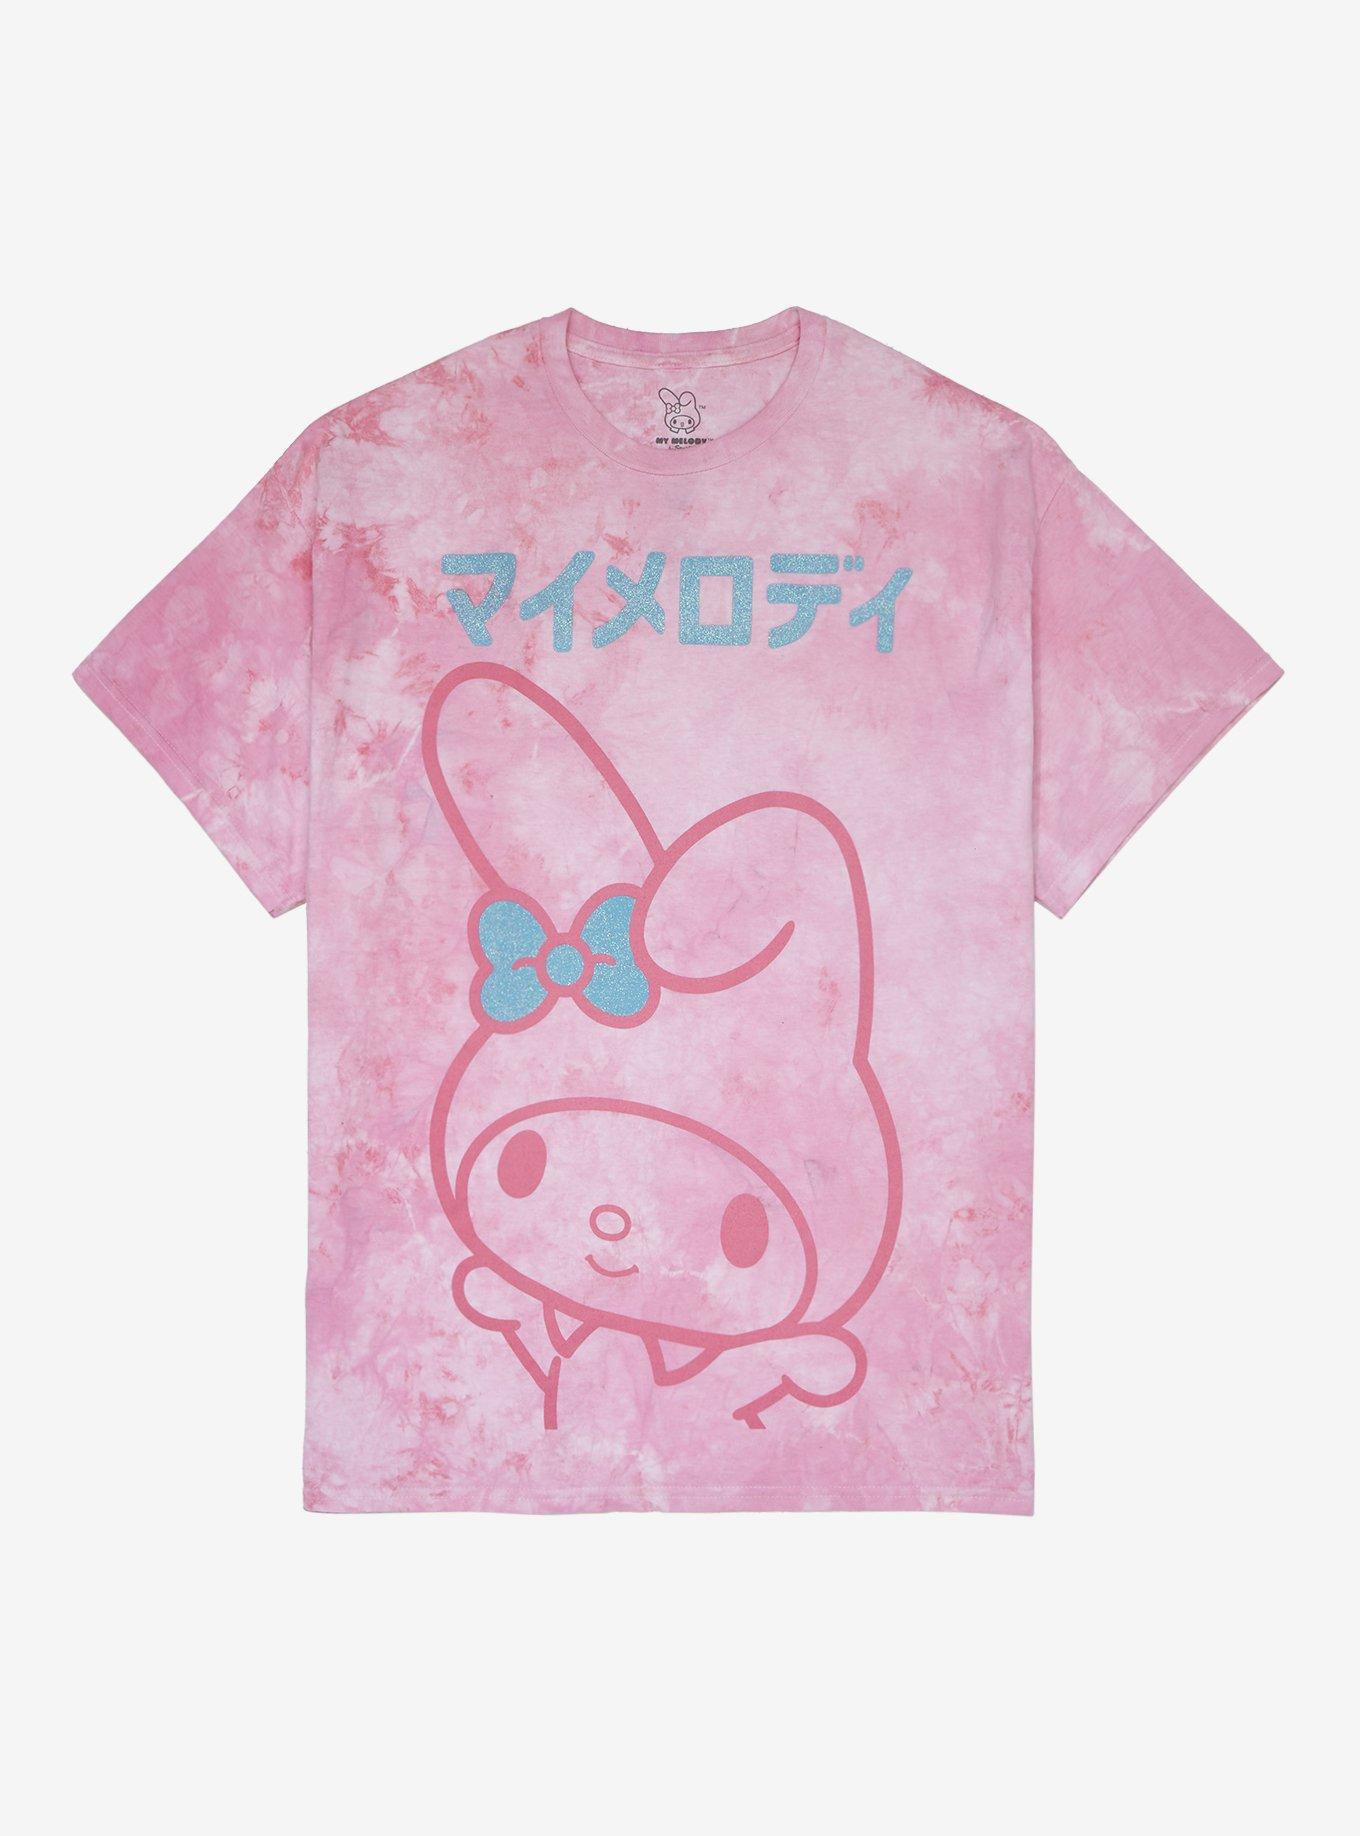 My Melody Jumbo Pink Tie-Dye Boyfriend Fit Girls T-Shirt